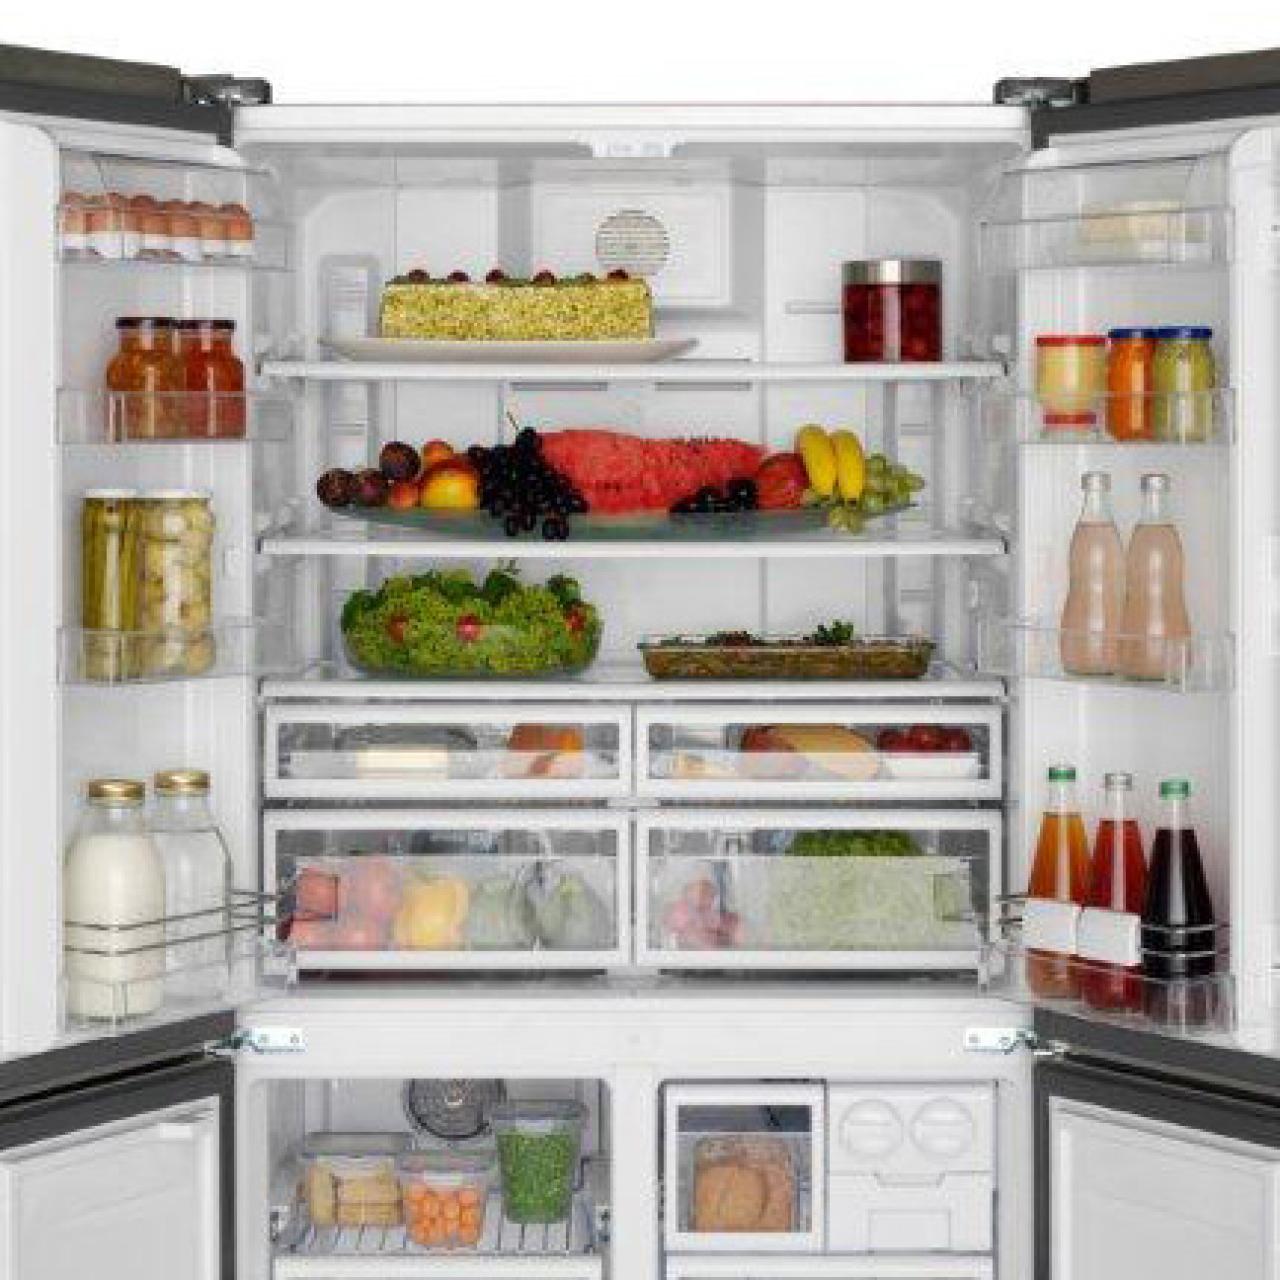 Fridge, Freezer or Pantry? Where to Keep 10 Common Foods